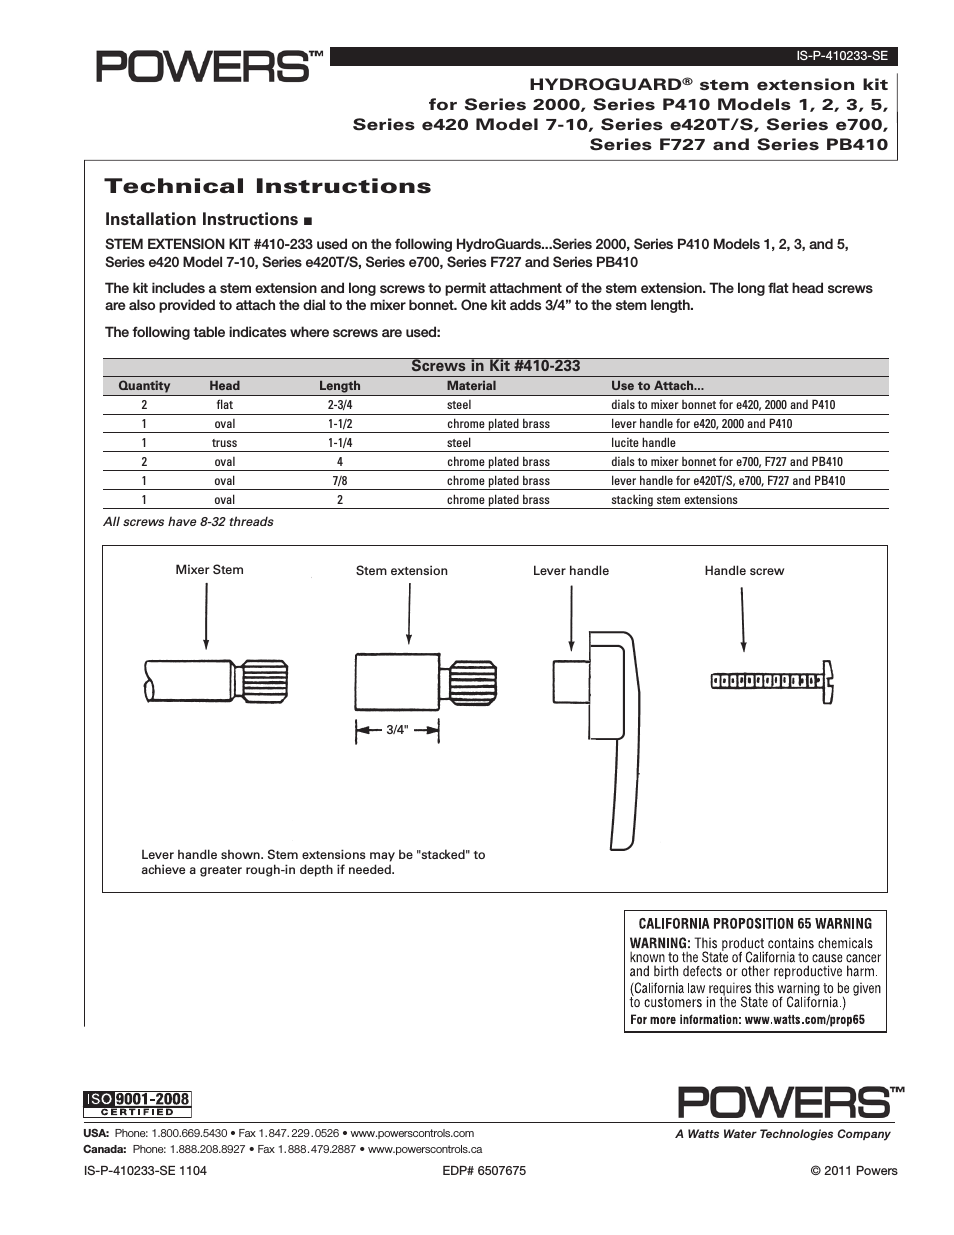 PB410 Series Pressure Balancing Mixing Valves - Stem Extension Kit